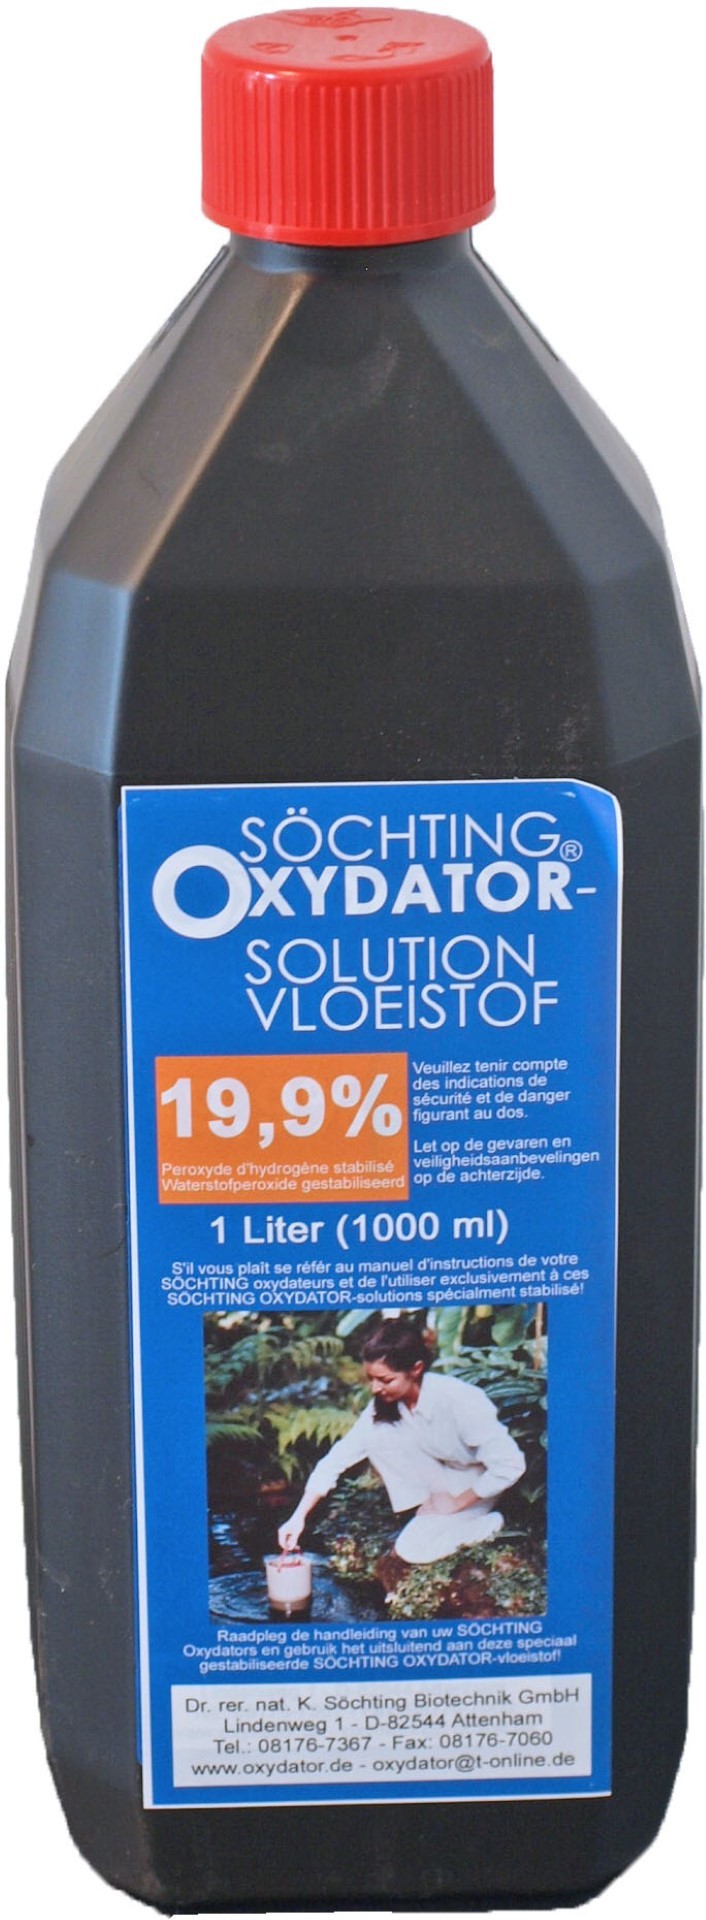 Sochting oxydator vloeistof 12% 1 liter